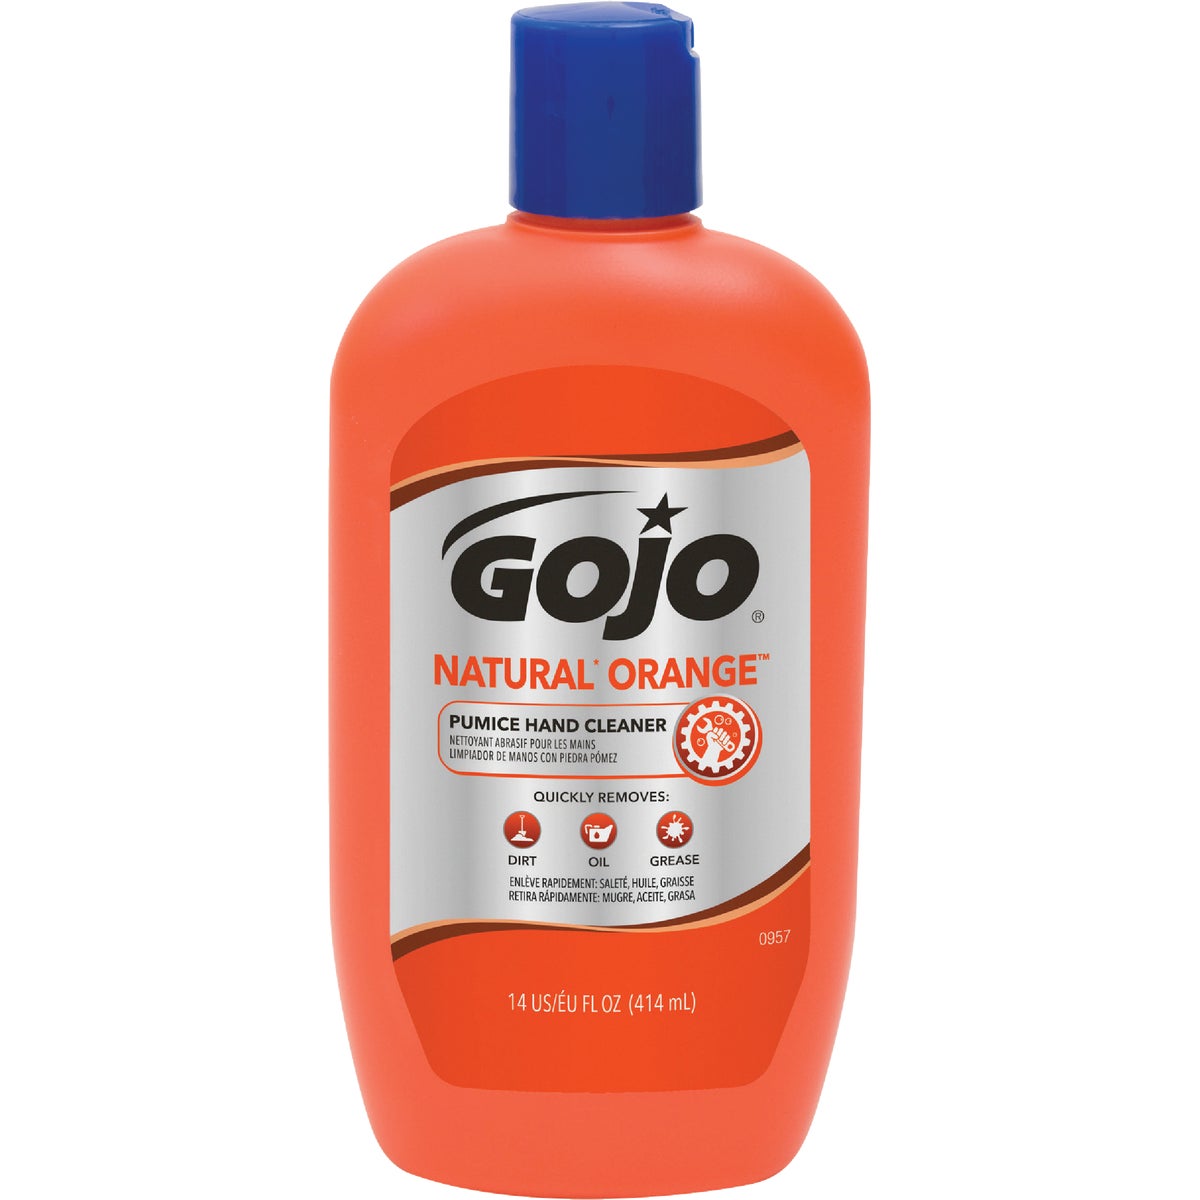 GOJO Natural Orange 14 Oz. Pumice Hand Cleaner